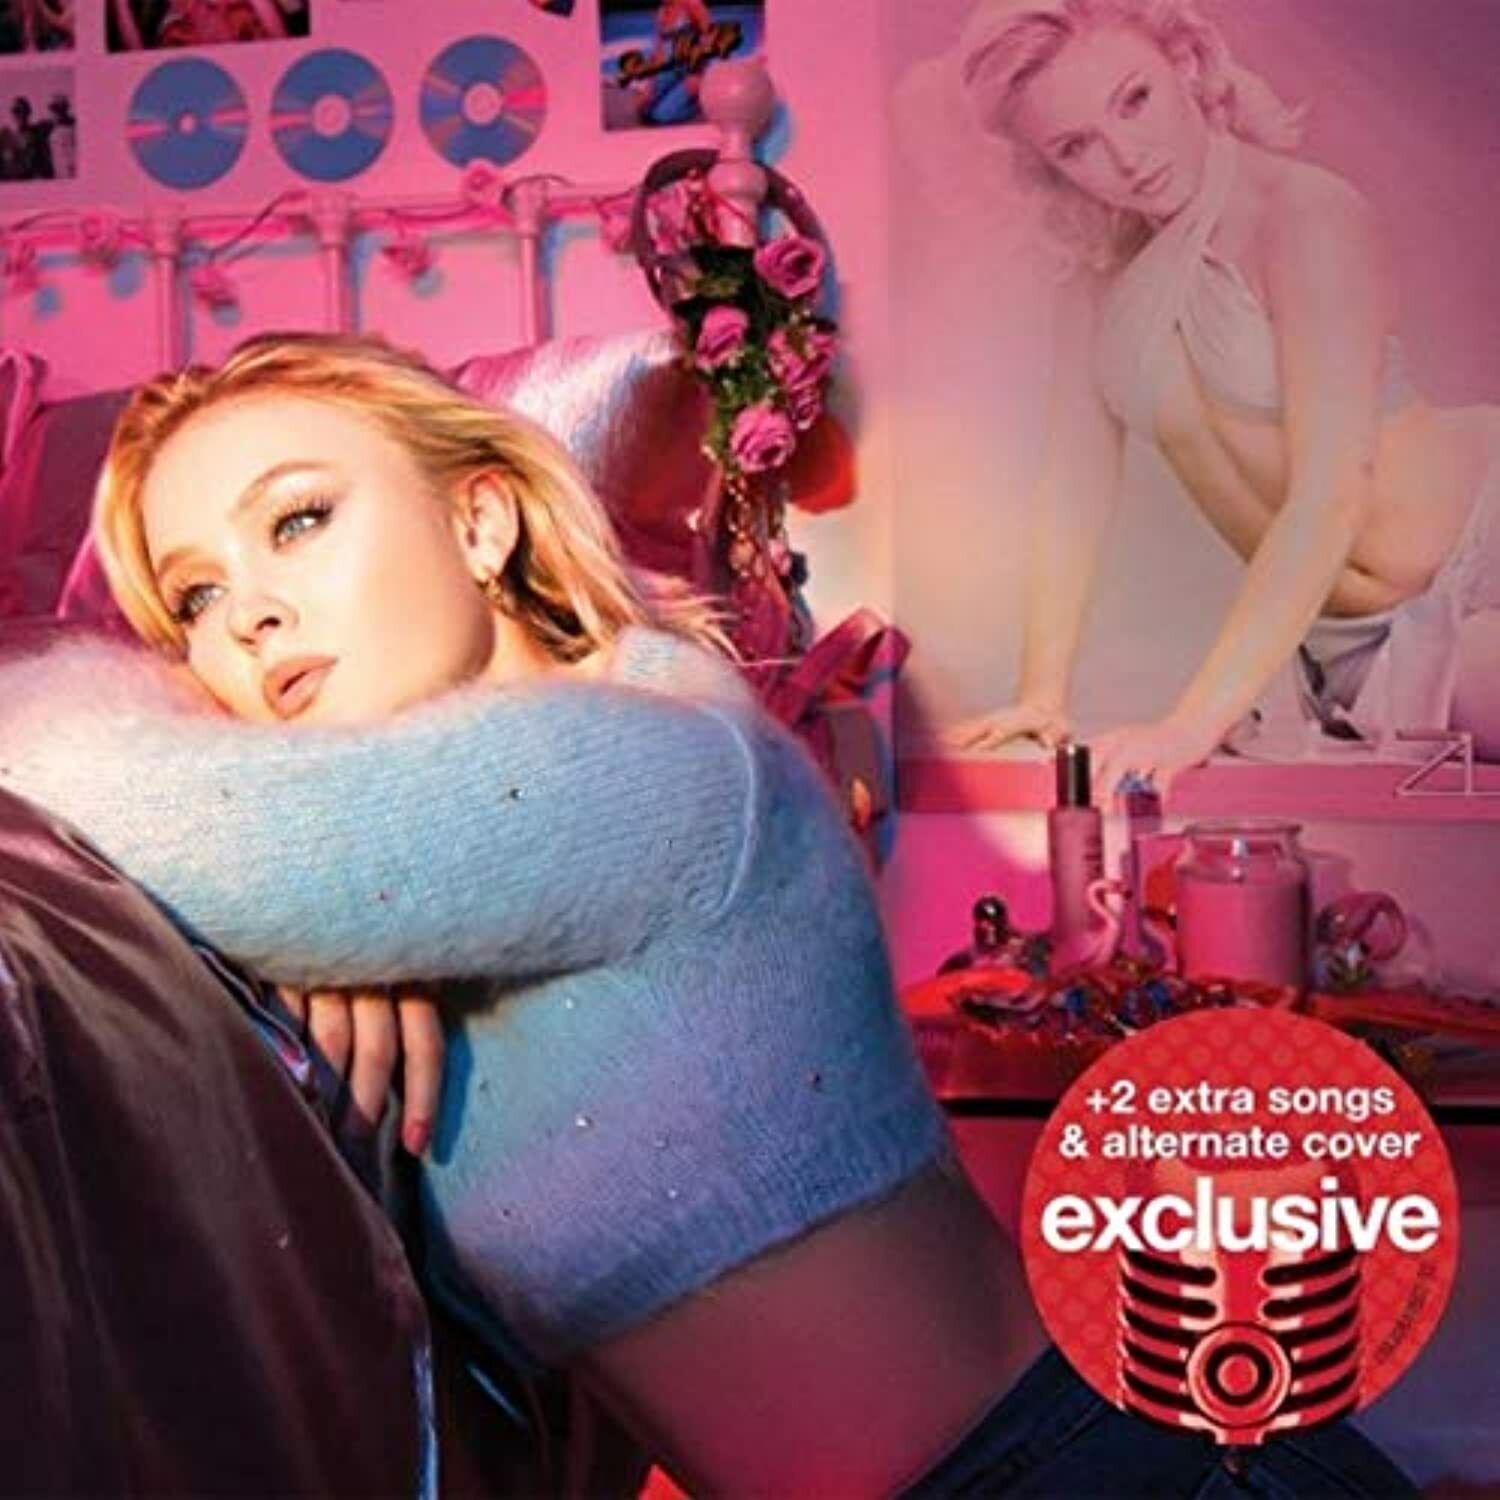 Zara Larsson - Poster Girl Target Exclusive CD w/2 Bonus Tracks / Alt Cover NEW